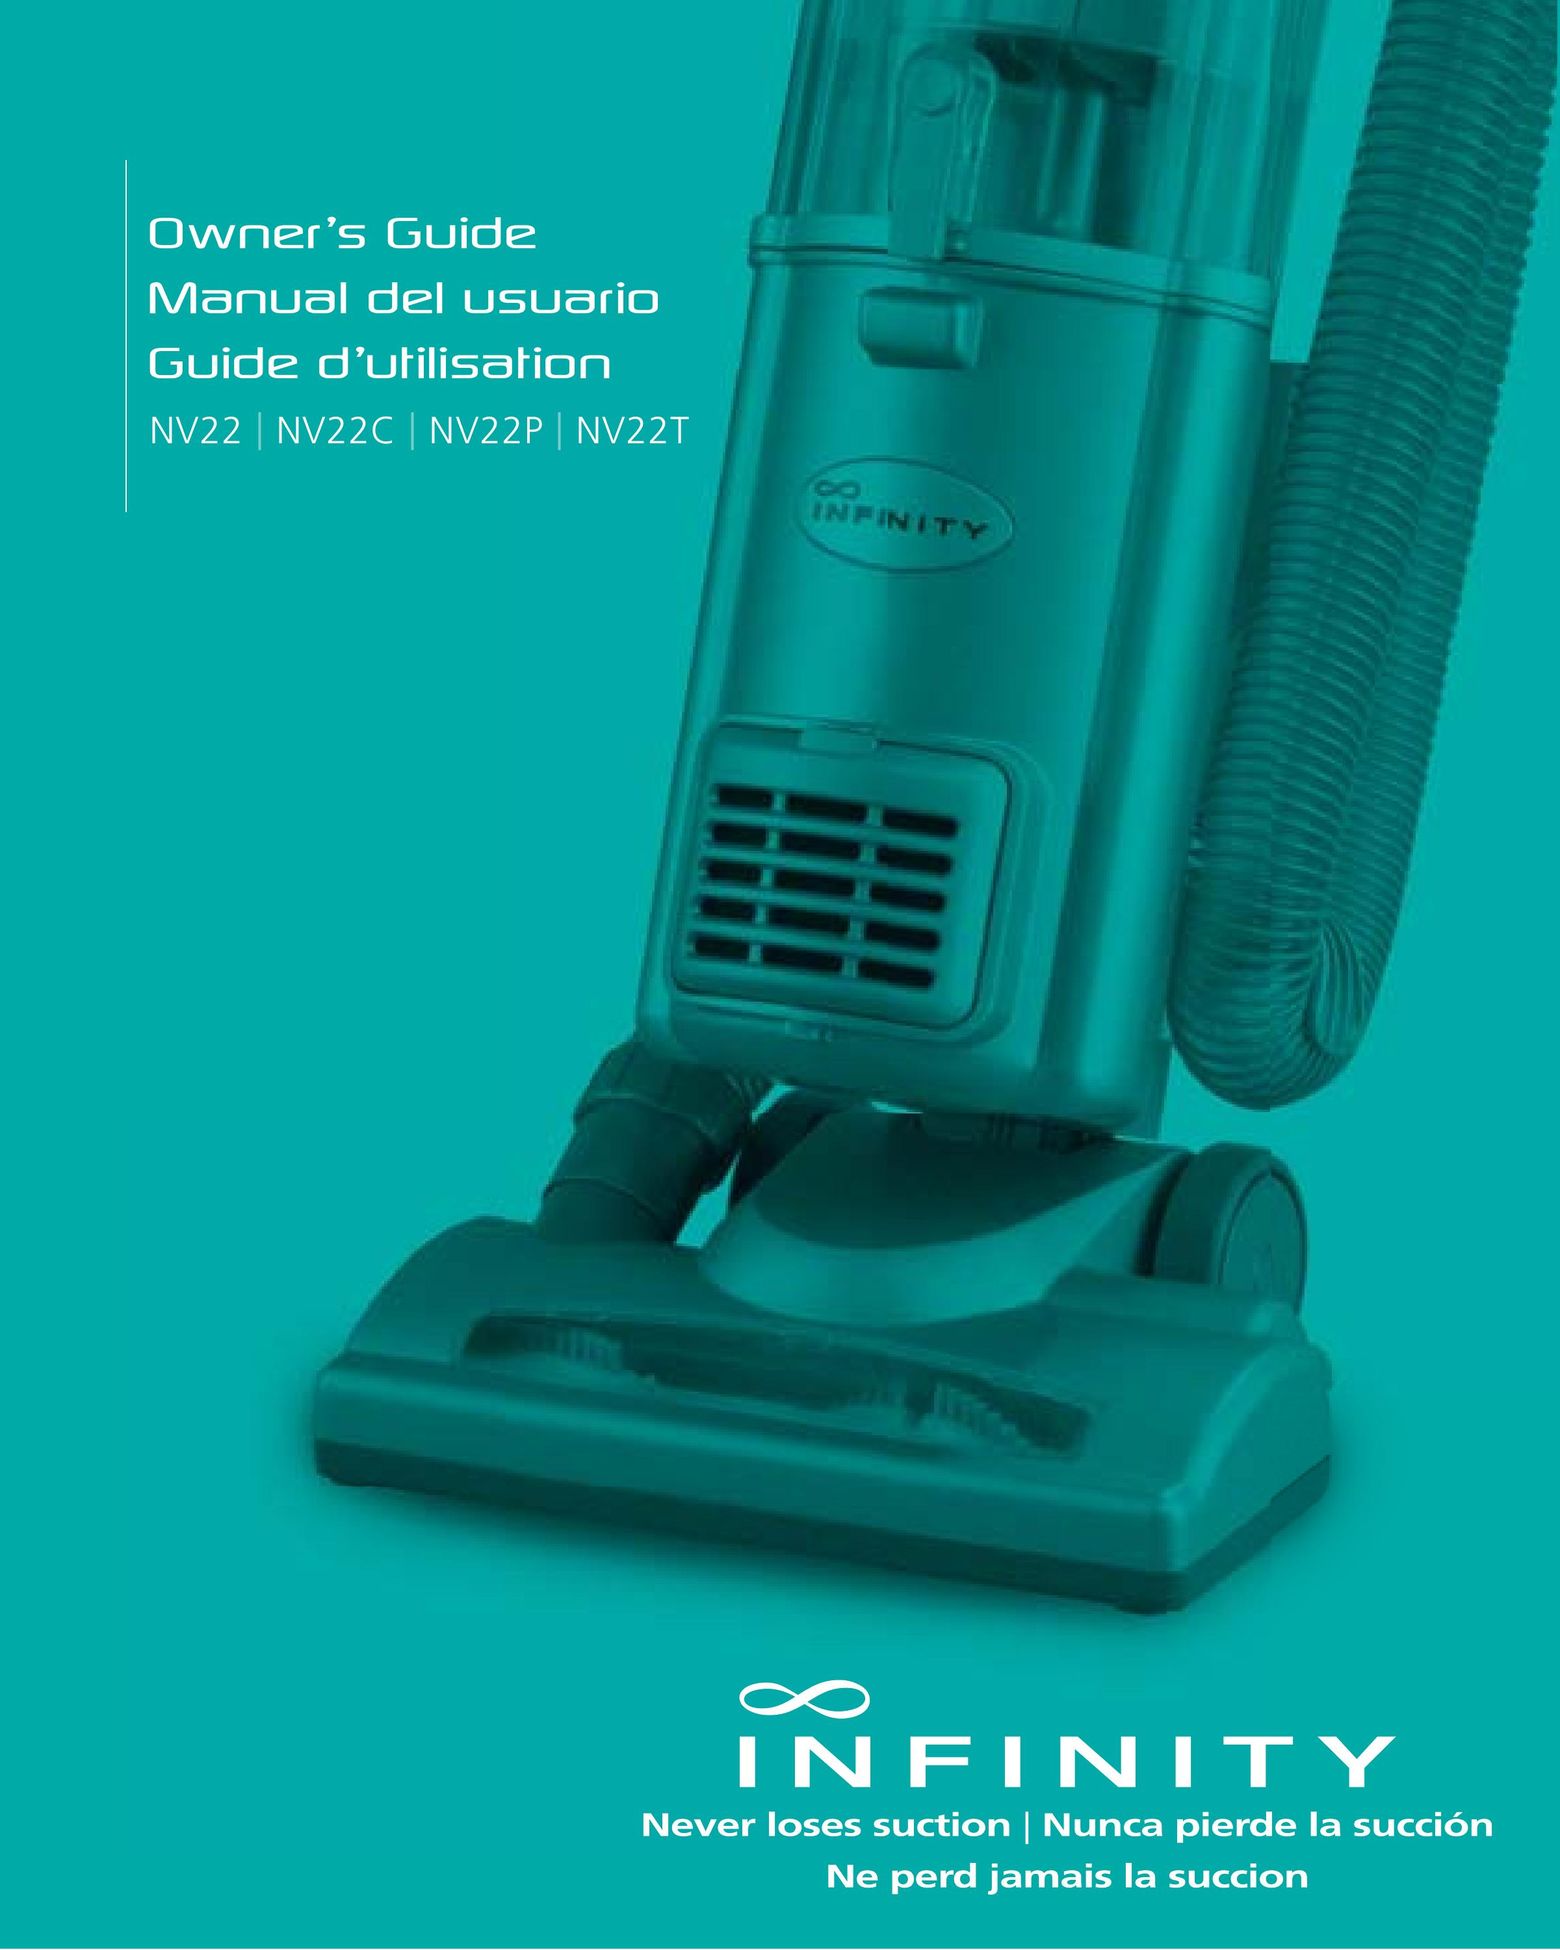 Infinity NV22T Vacuum Cleaner User Manual